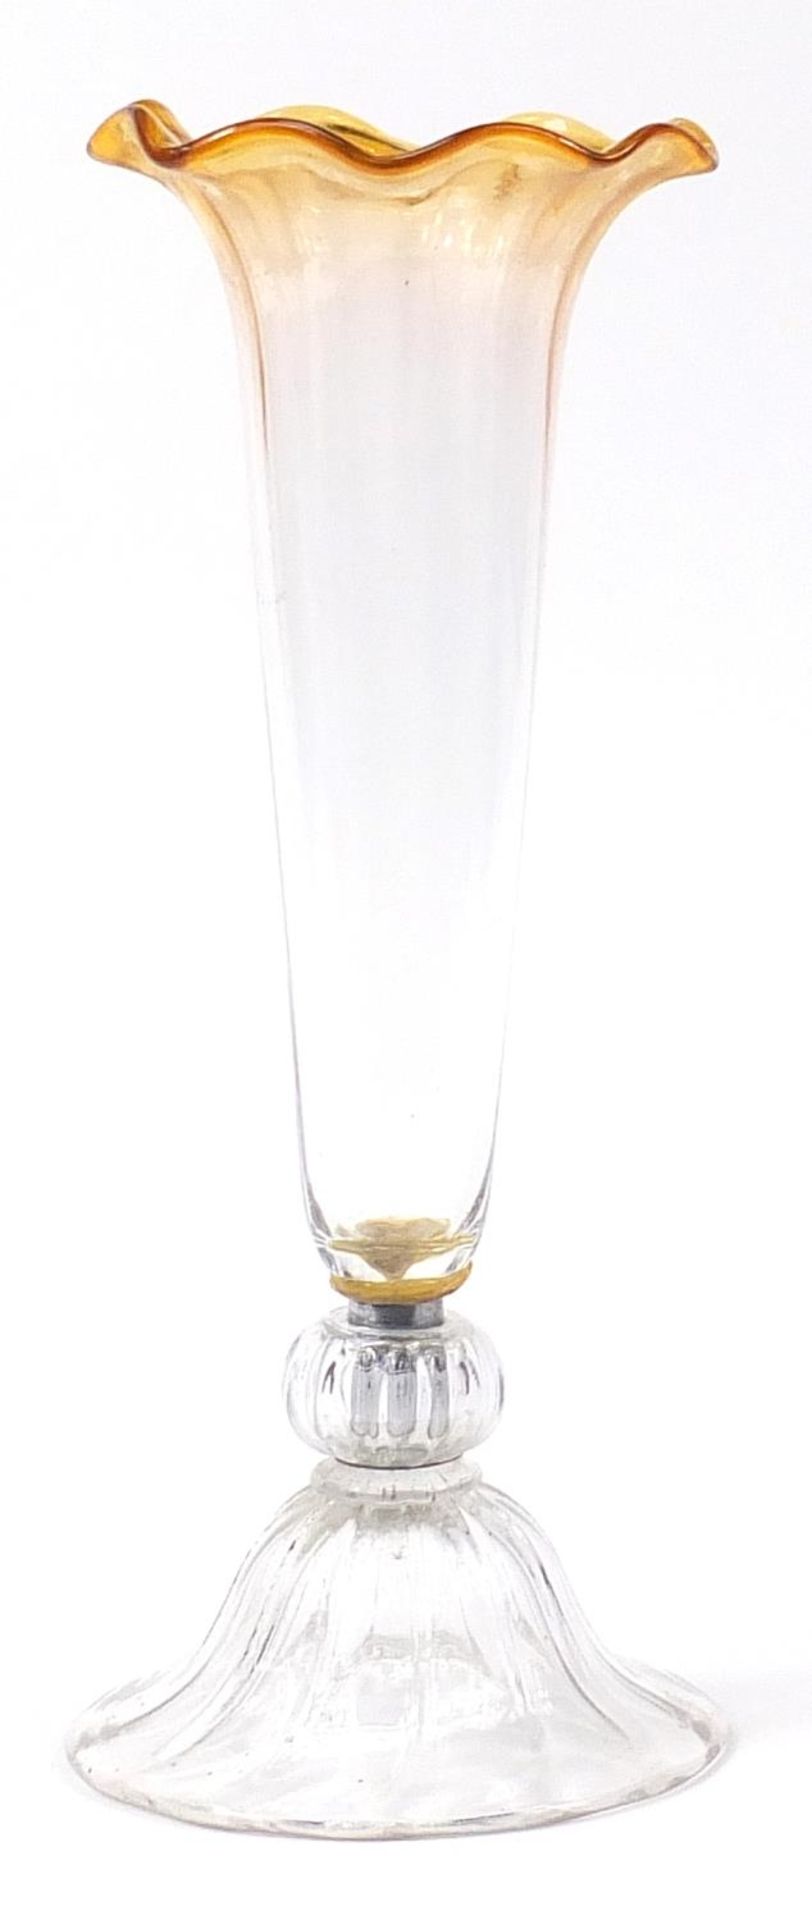 Large glass vase with orange frilled rim, 51cm high - Image 2 of 3